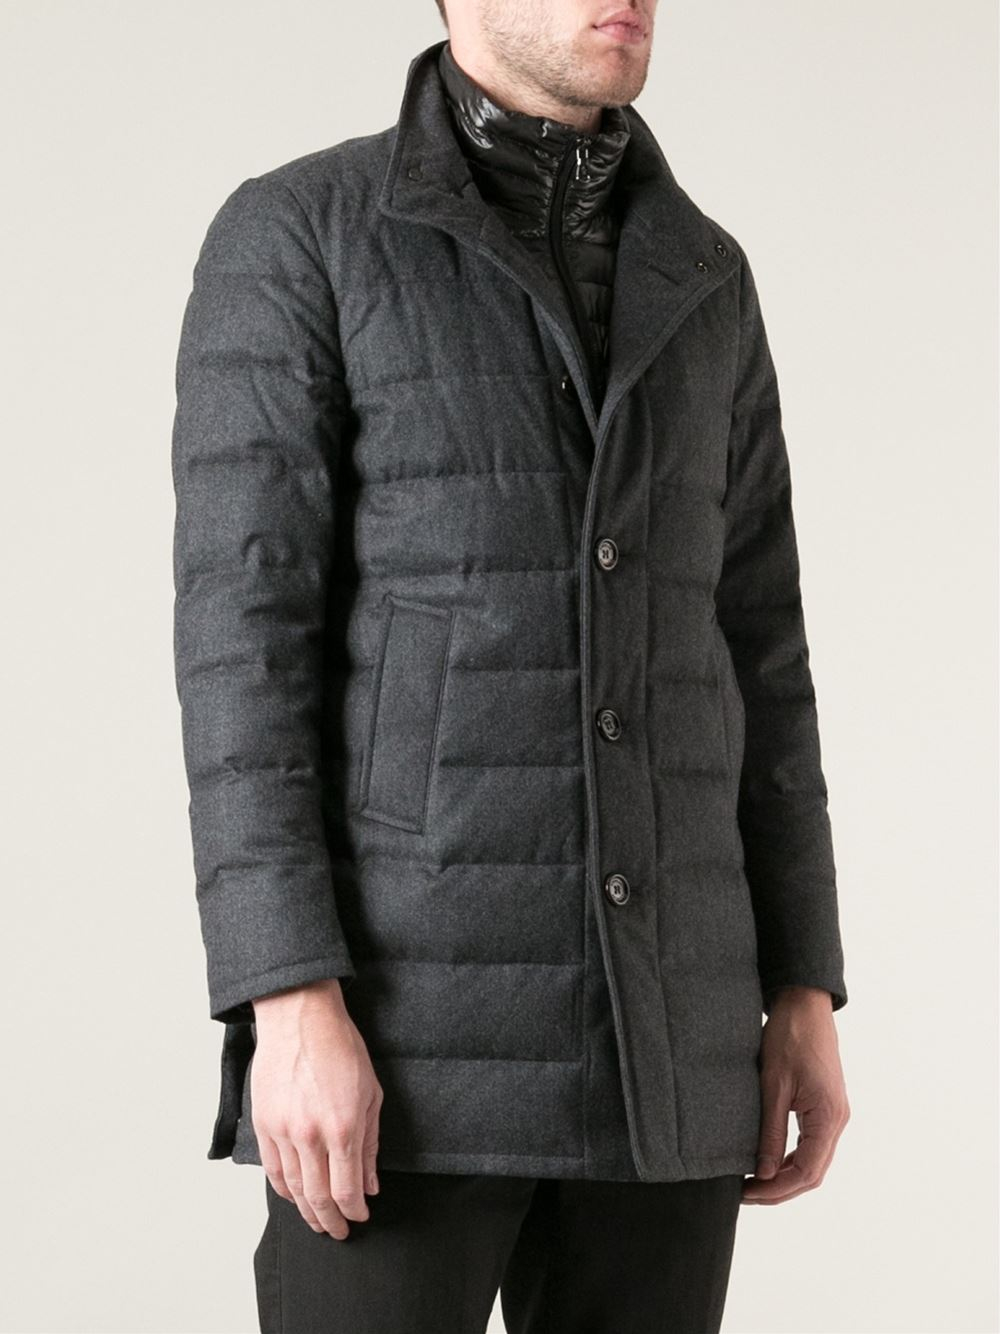 Lyst - Moncler Vallier Jacket in Gray for Men